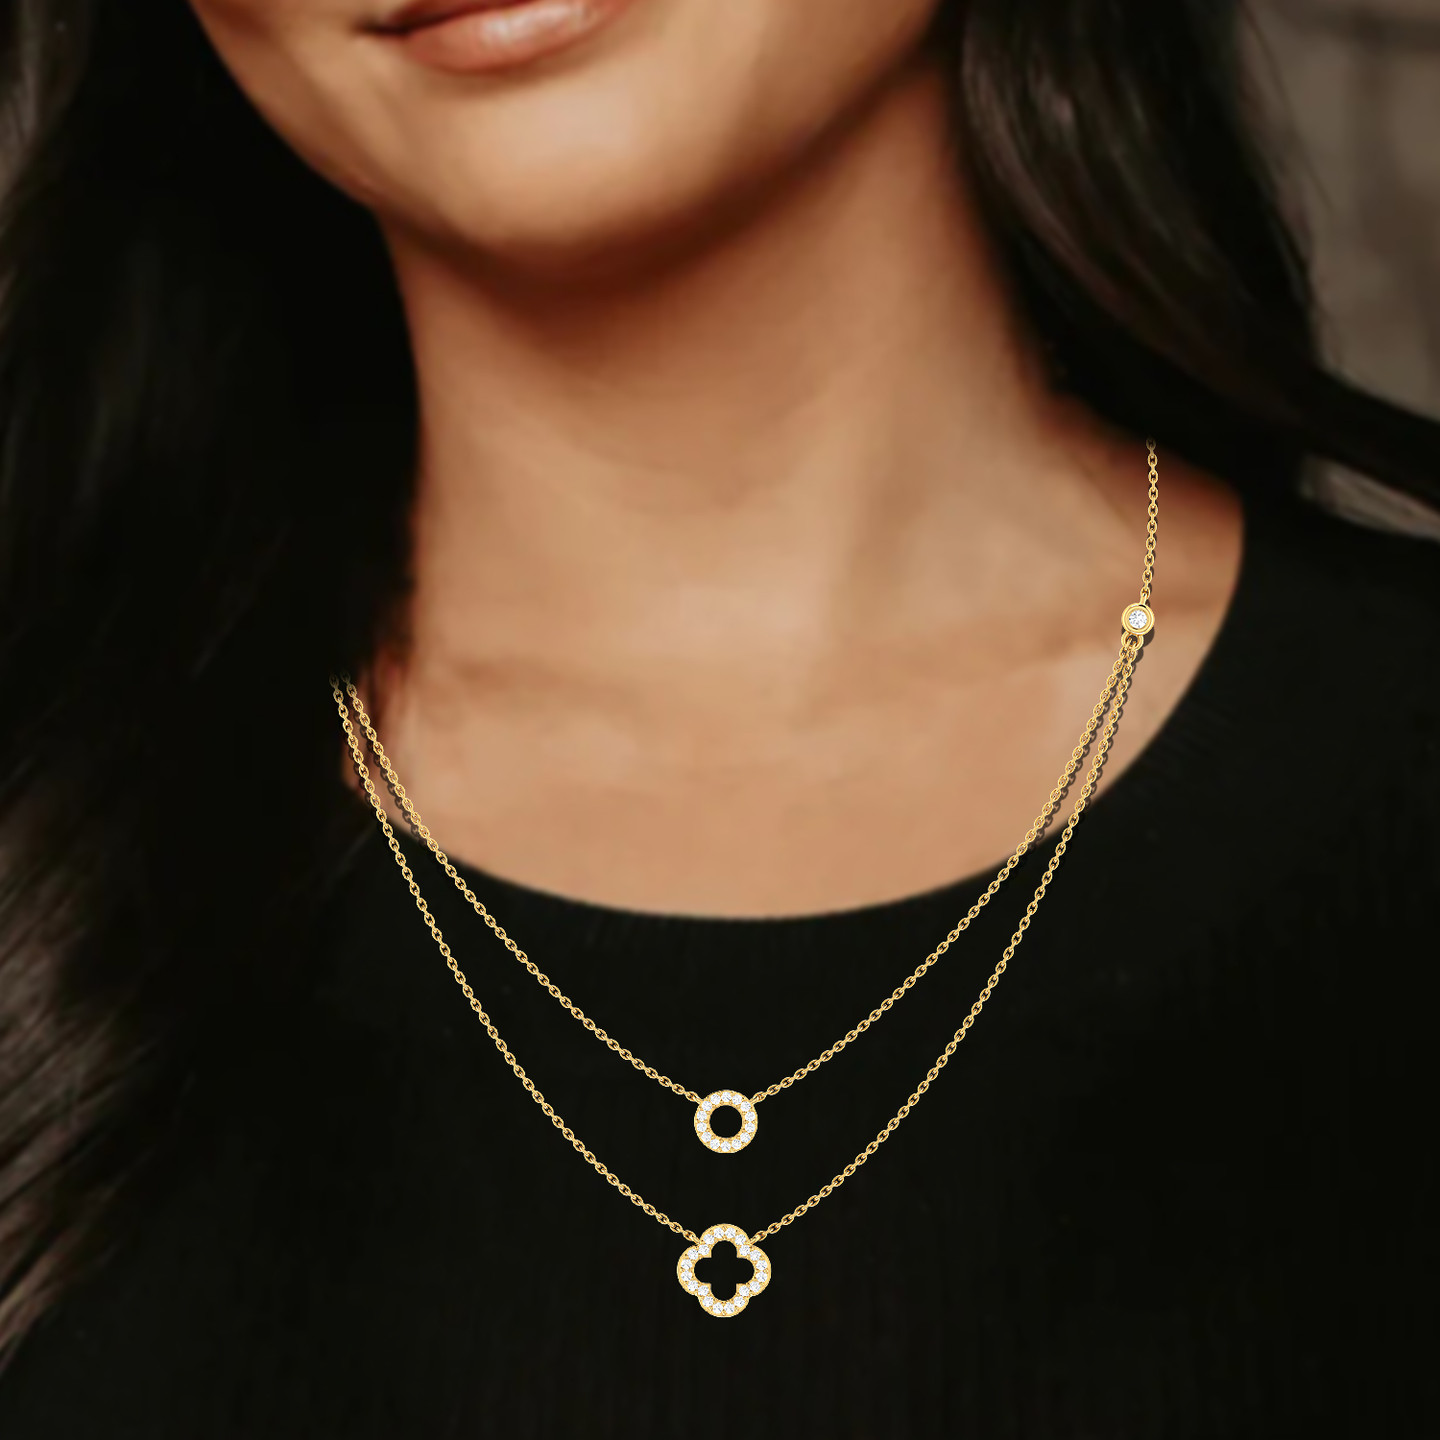 18K Gold Diamond Layered Necklace - 2